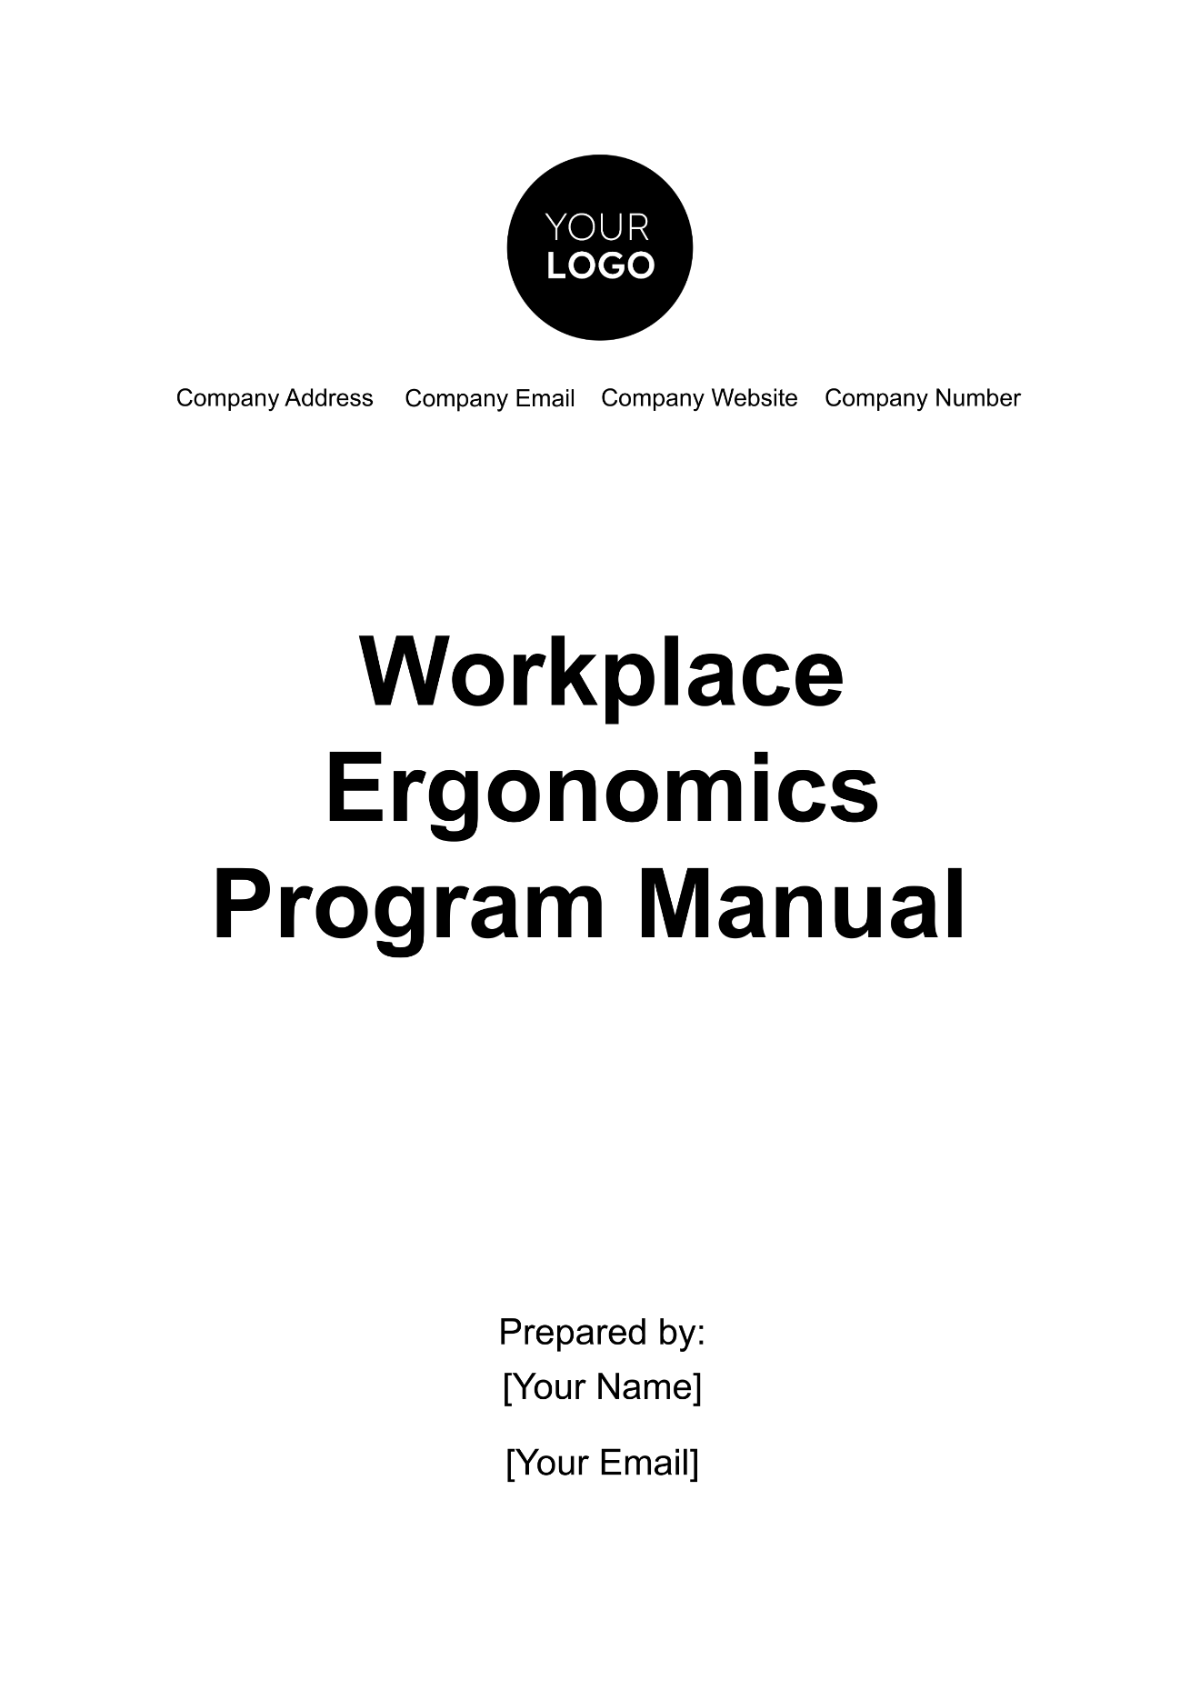 Workplace Ergonomics Program Manual Template